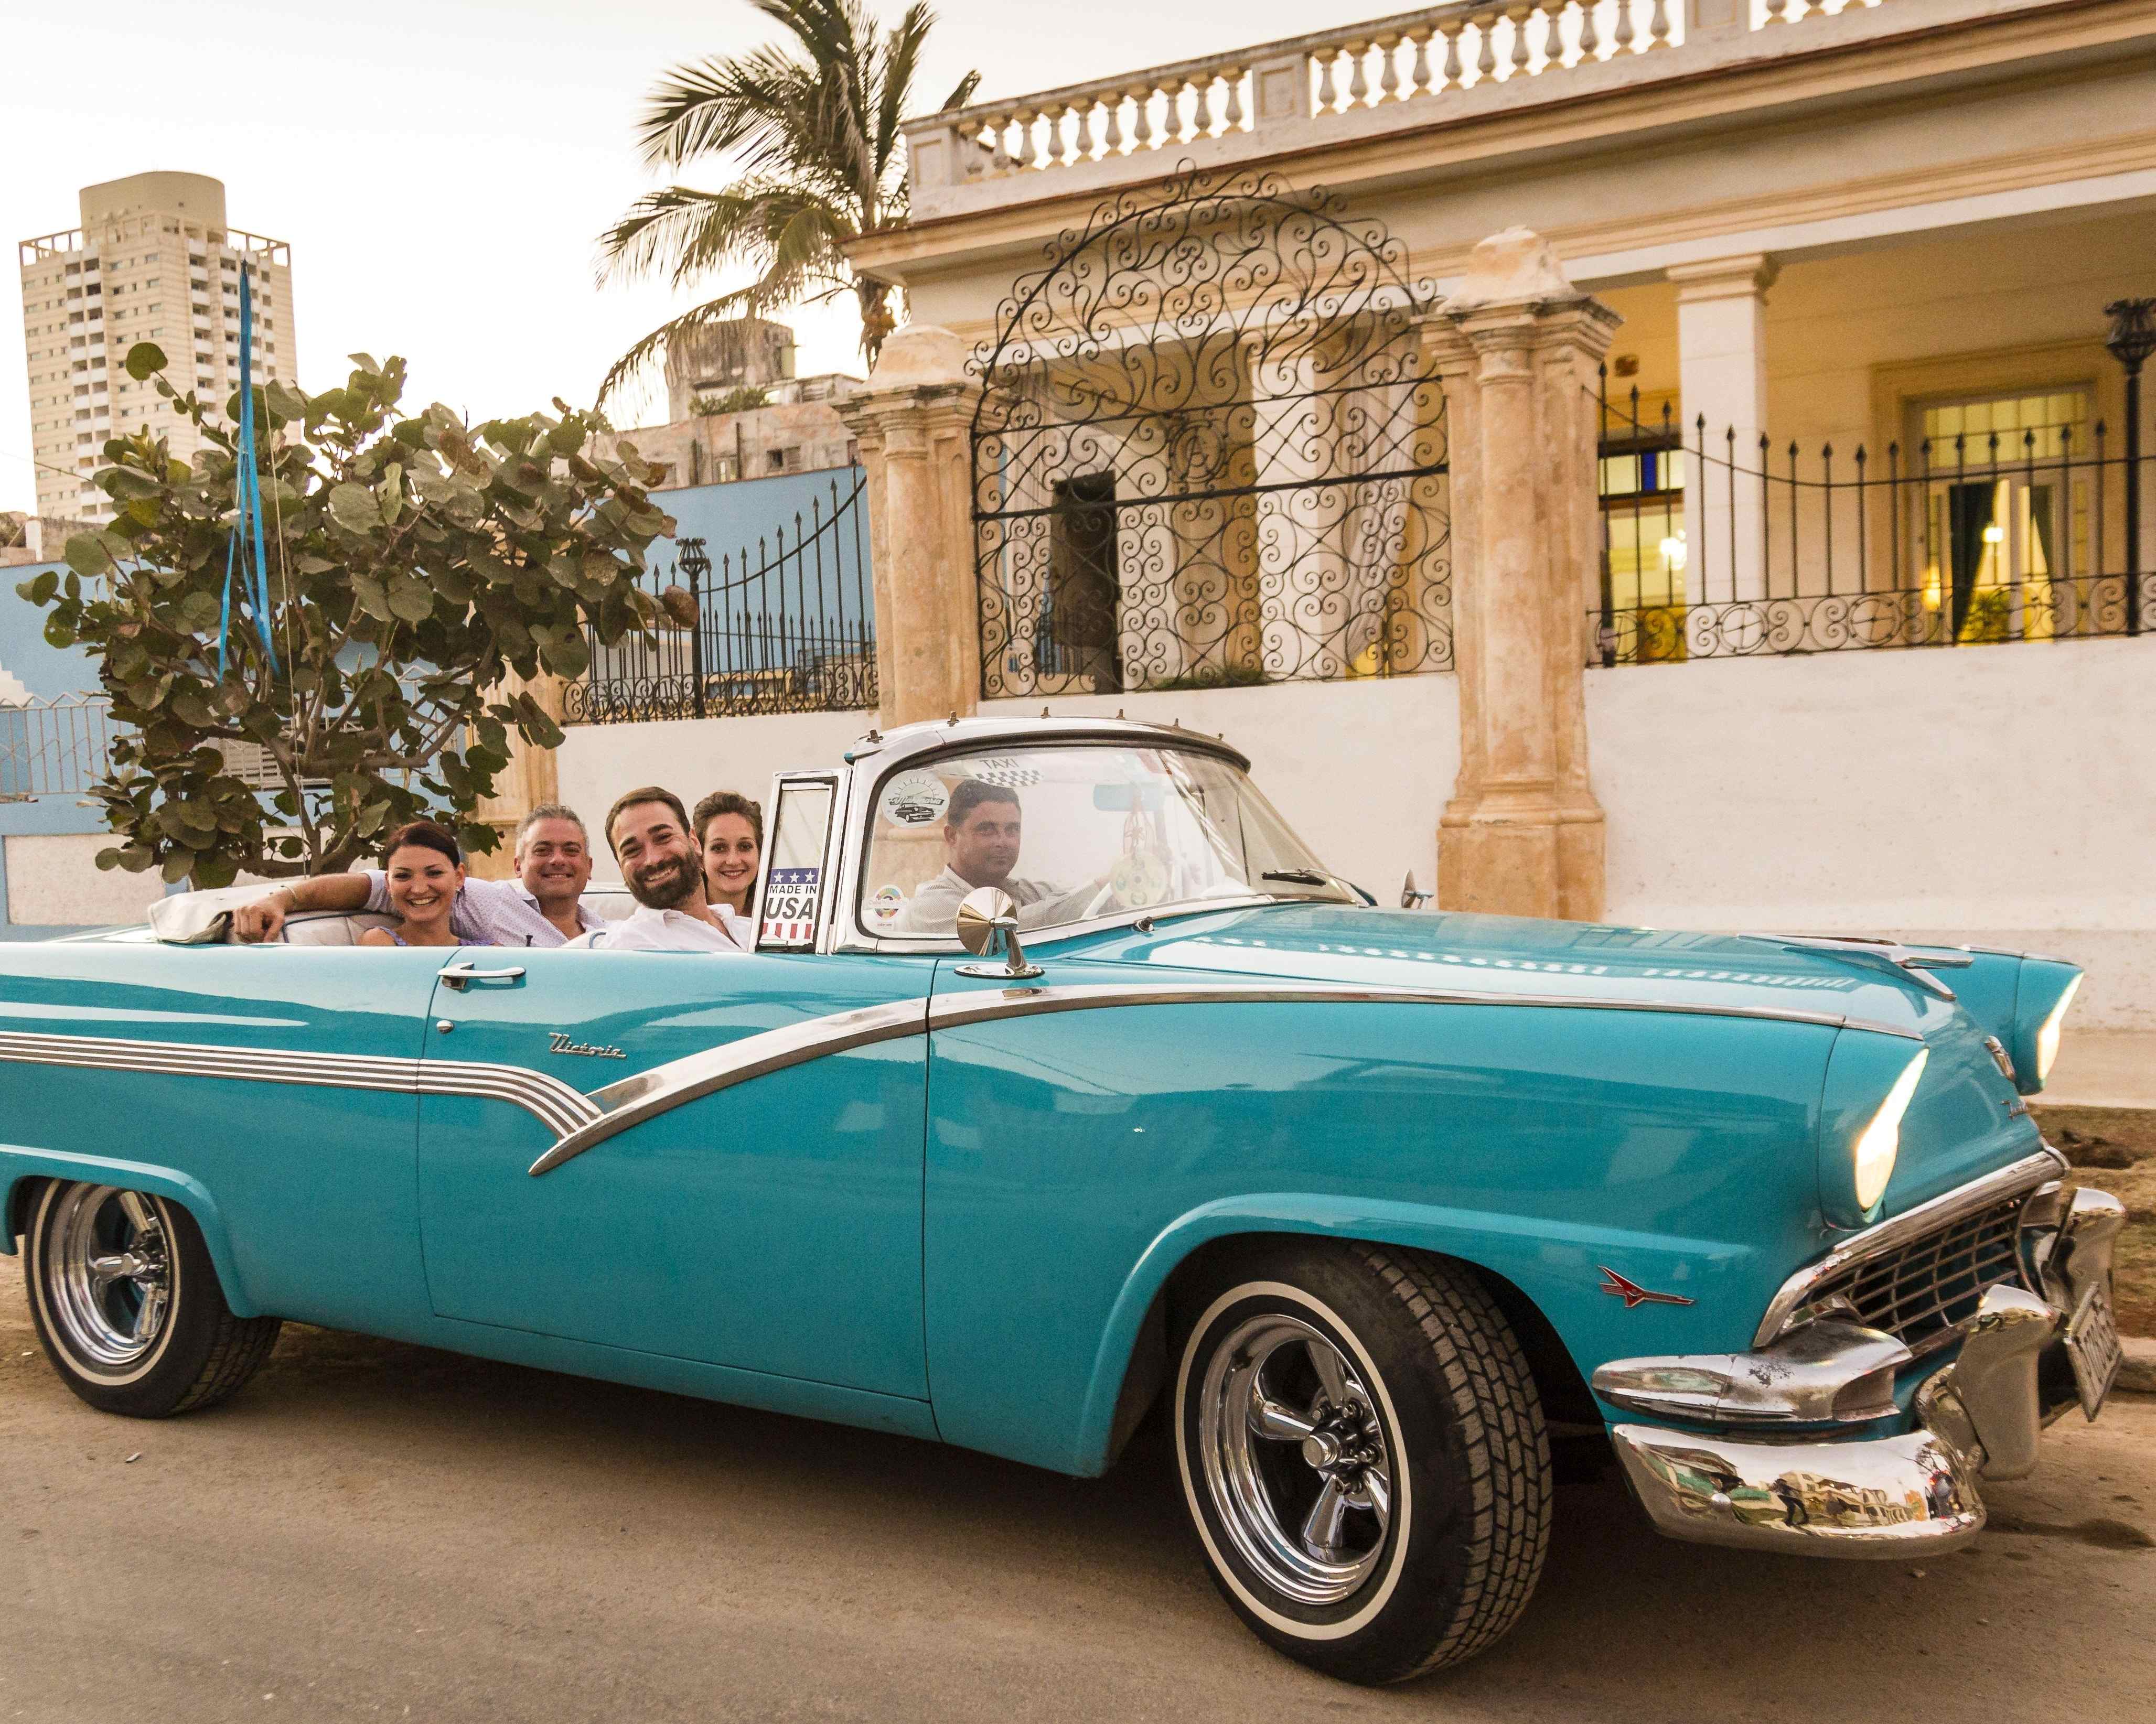 Koloniales Kuba mit All-Inclusive in Varadero